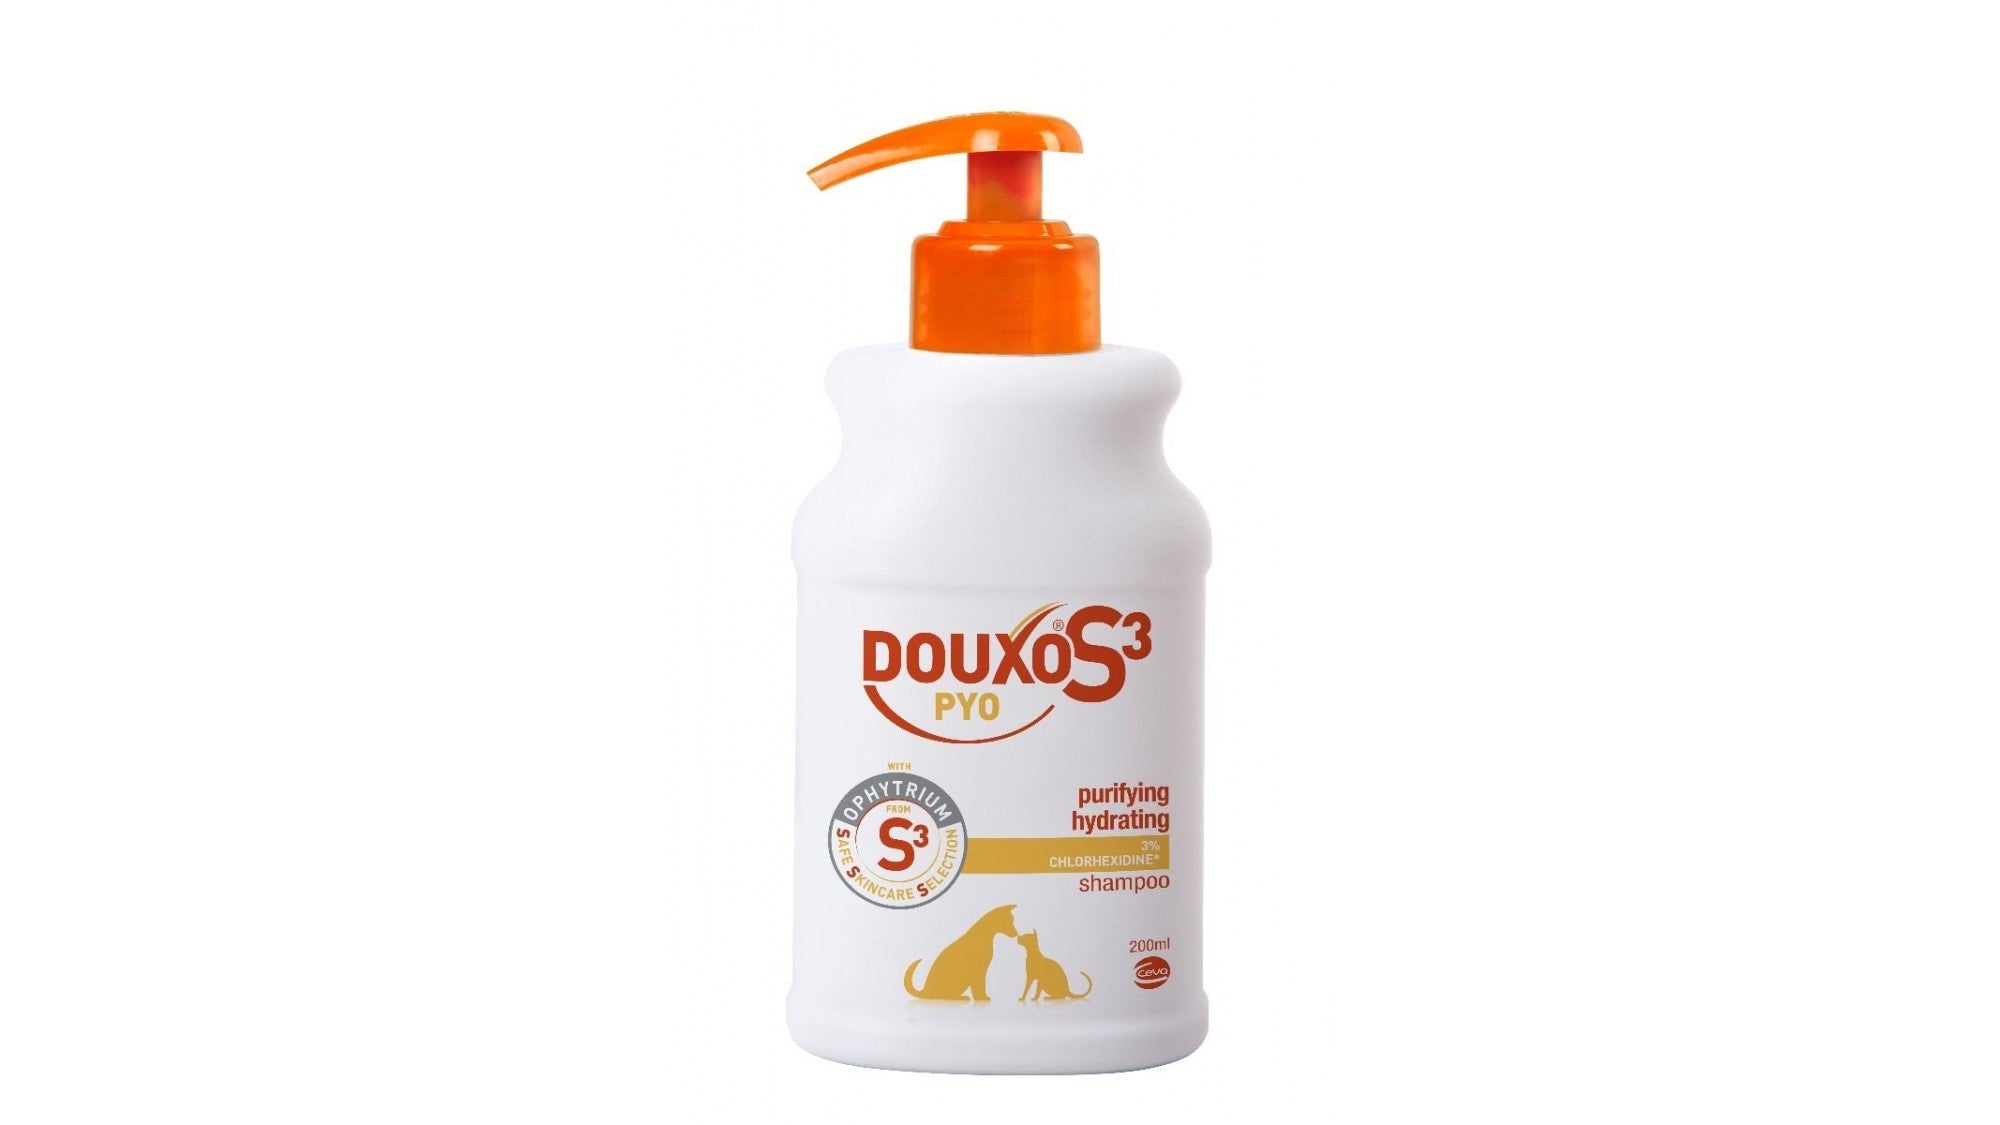 Douxo Pyo Sampon Chlorhexidine, 200 ml - ALTVET - Farmacie veterinara - Pet Shop - Cosmetica